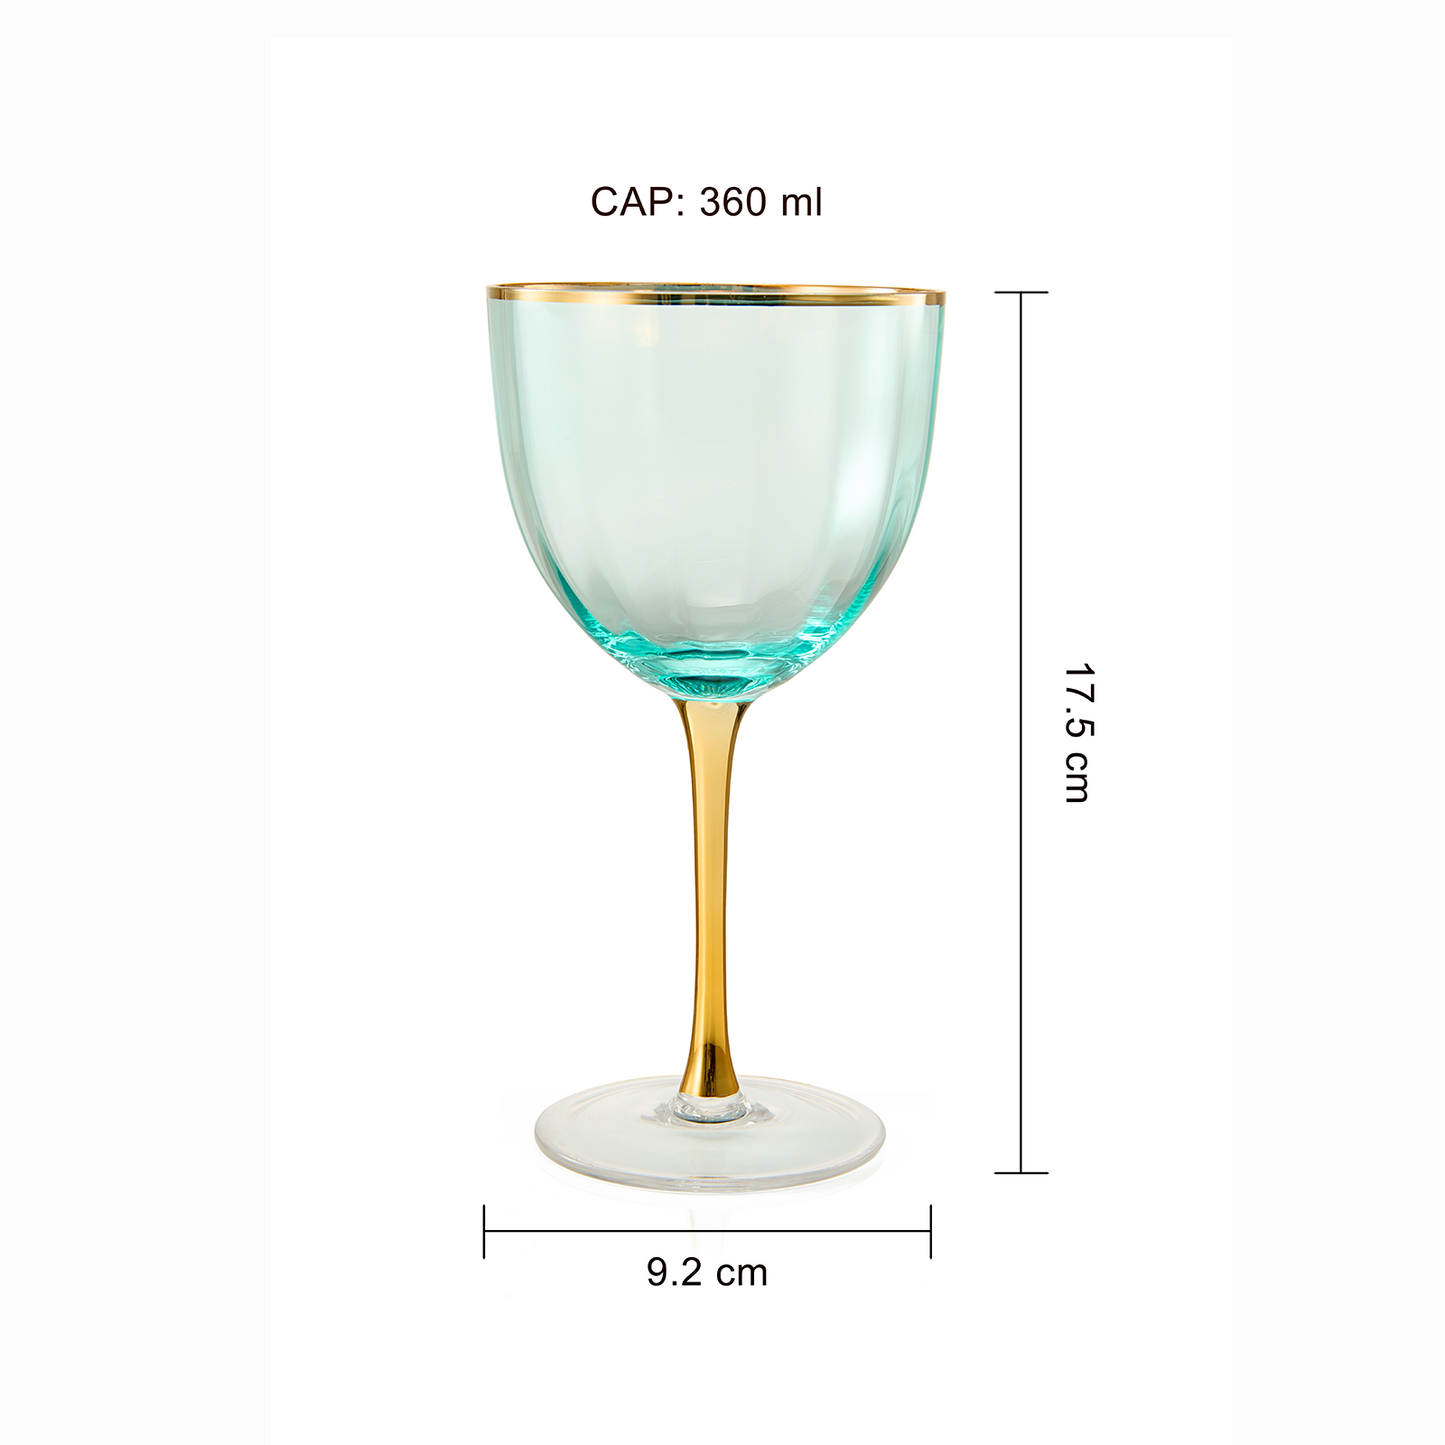 Crystal Christmas Santa's Sleigh Wine & Water Glasses - Set of 2, 17.5 –  The Wine Savant